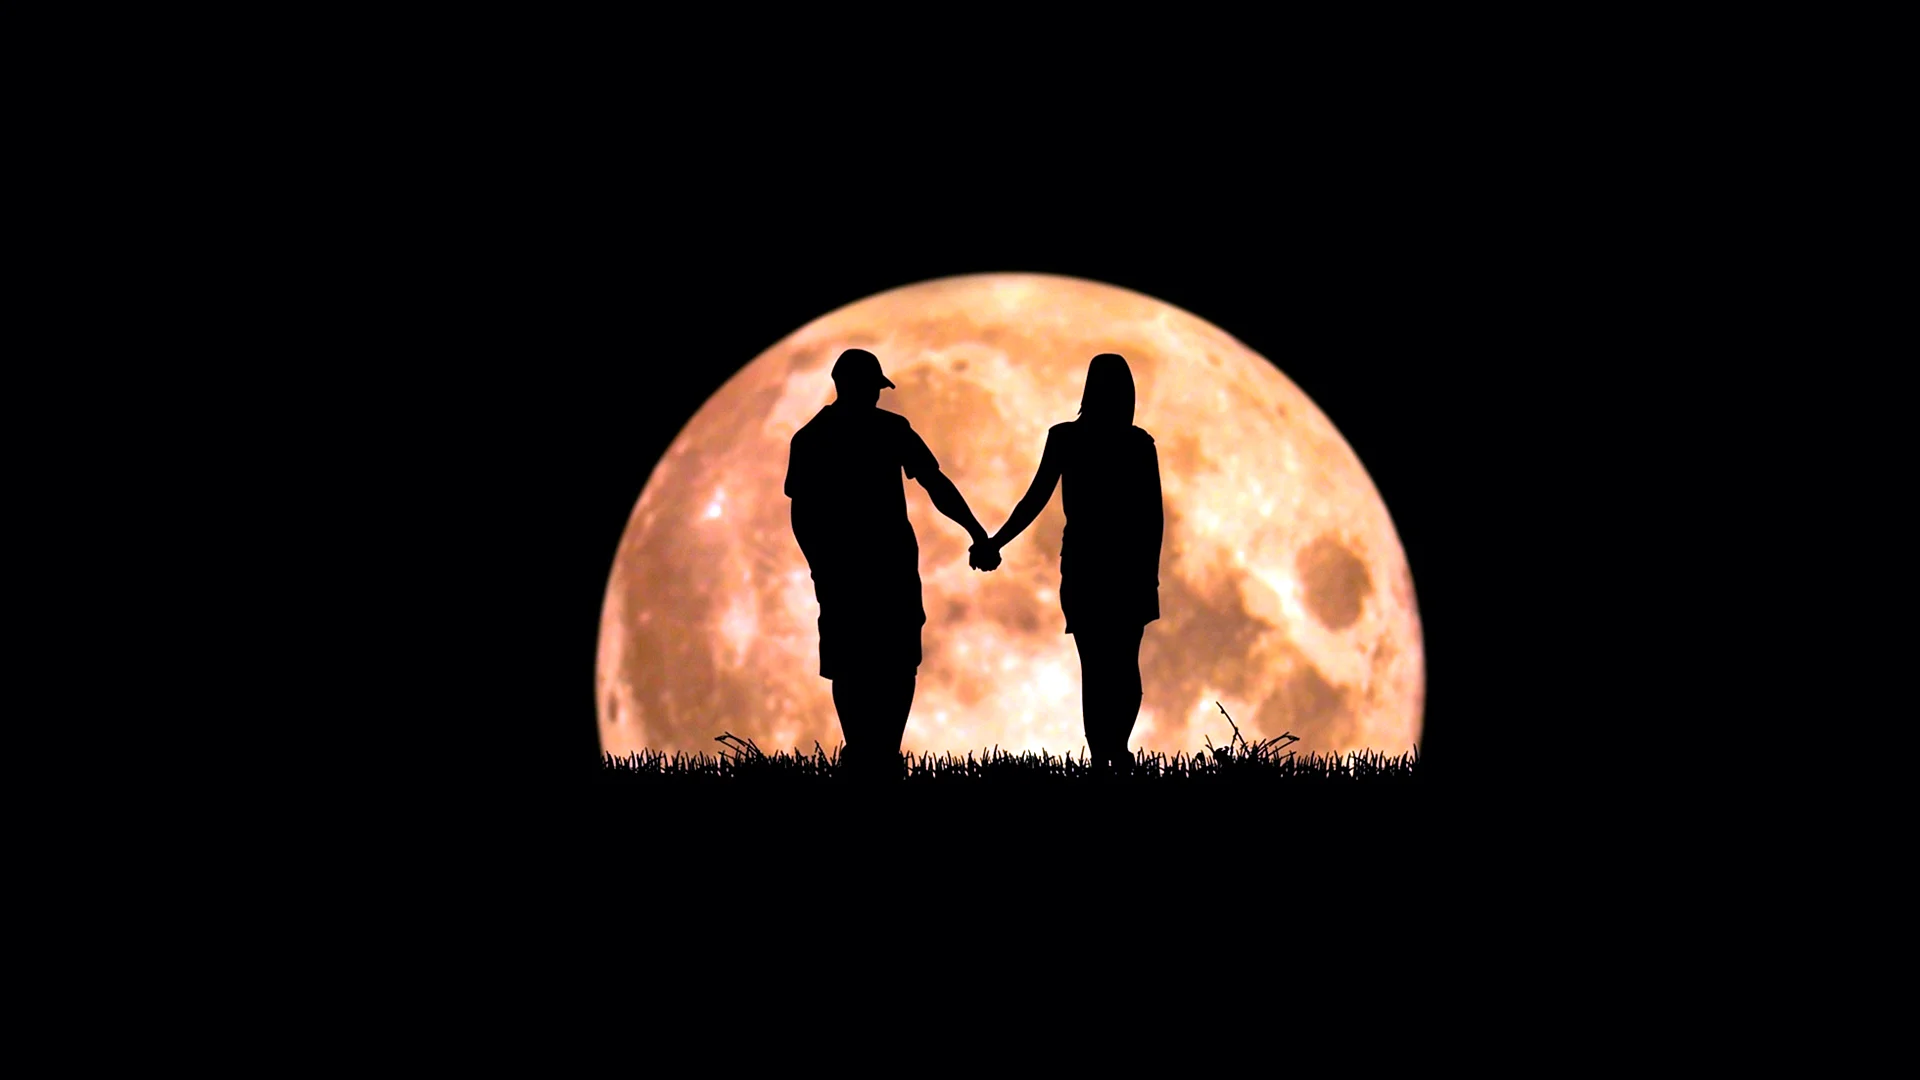 Full Moon Romance Wallpaper